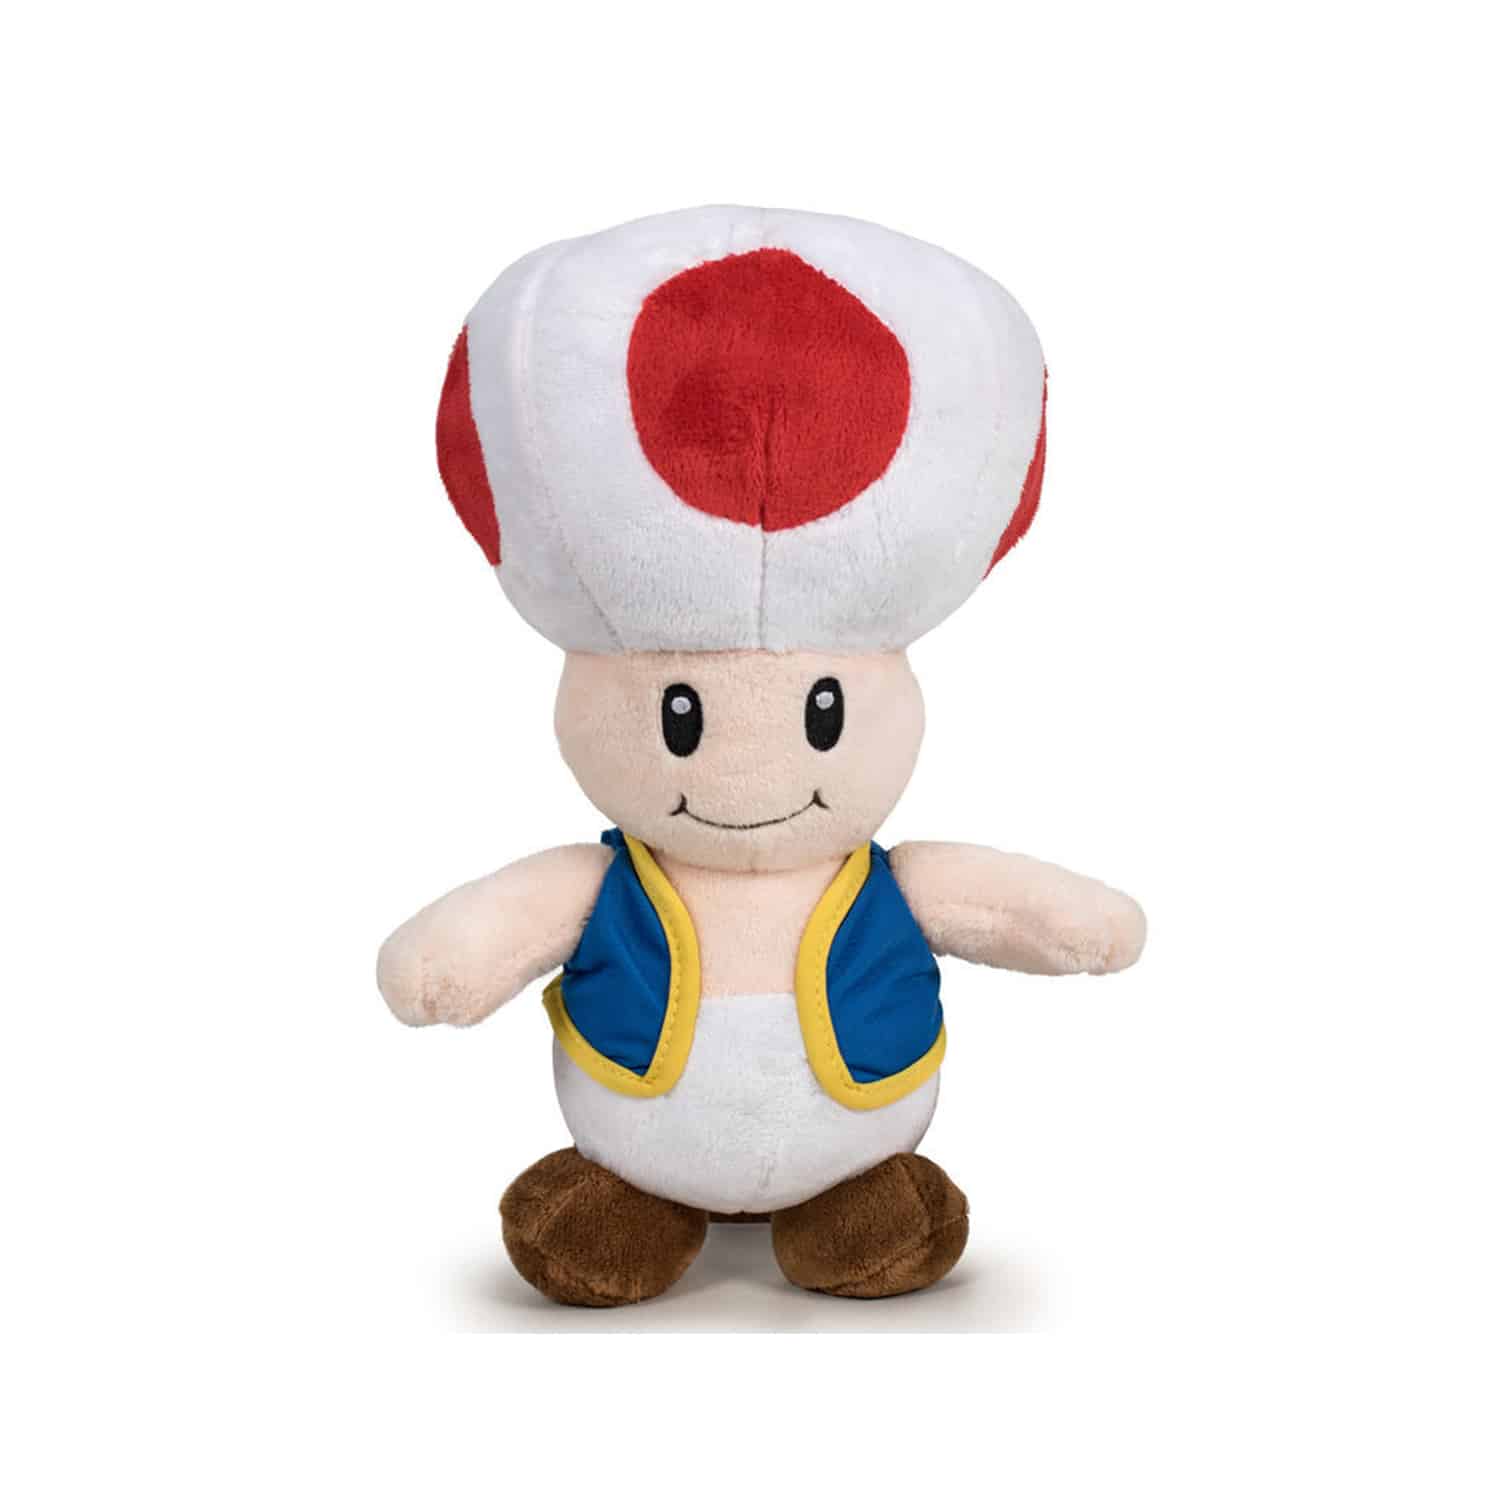 Super Mario - Toad Plush Toy (Small)